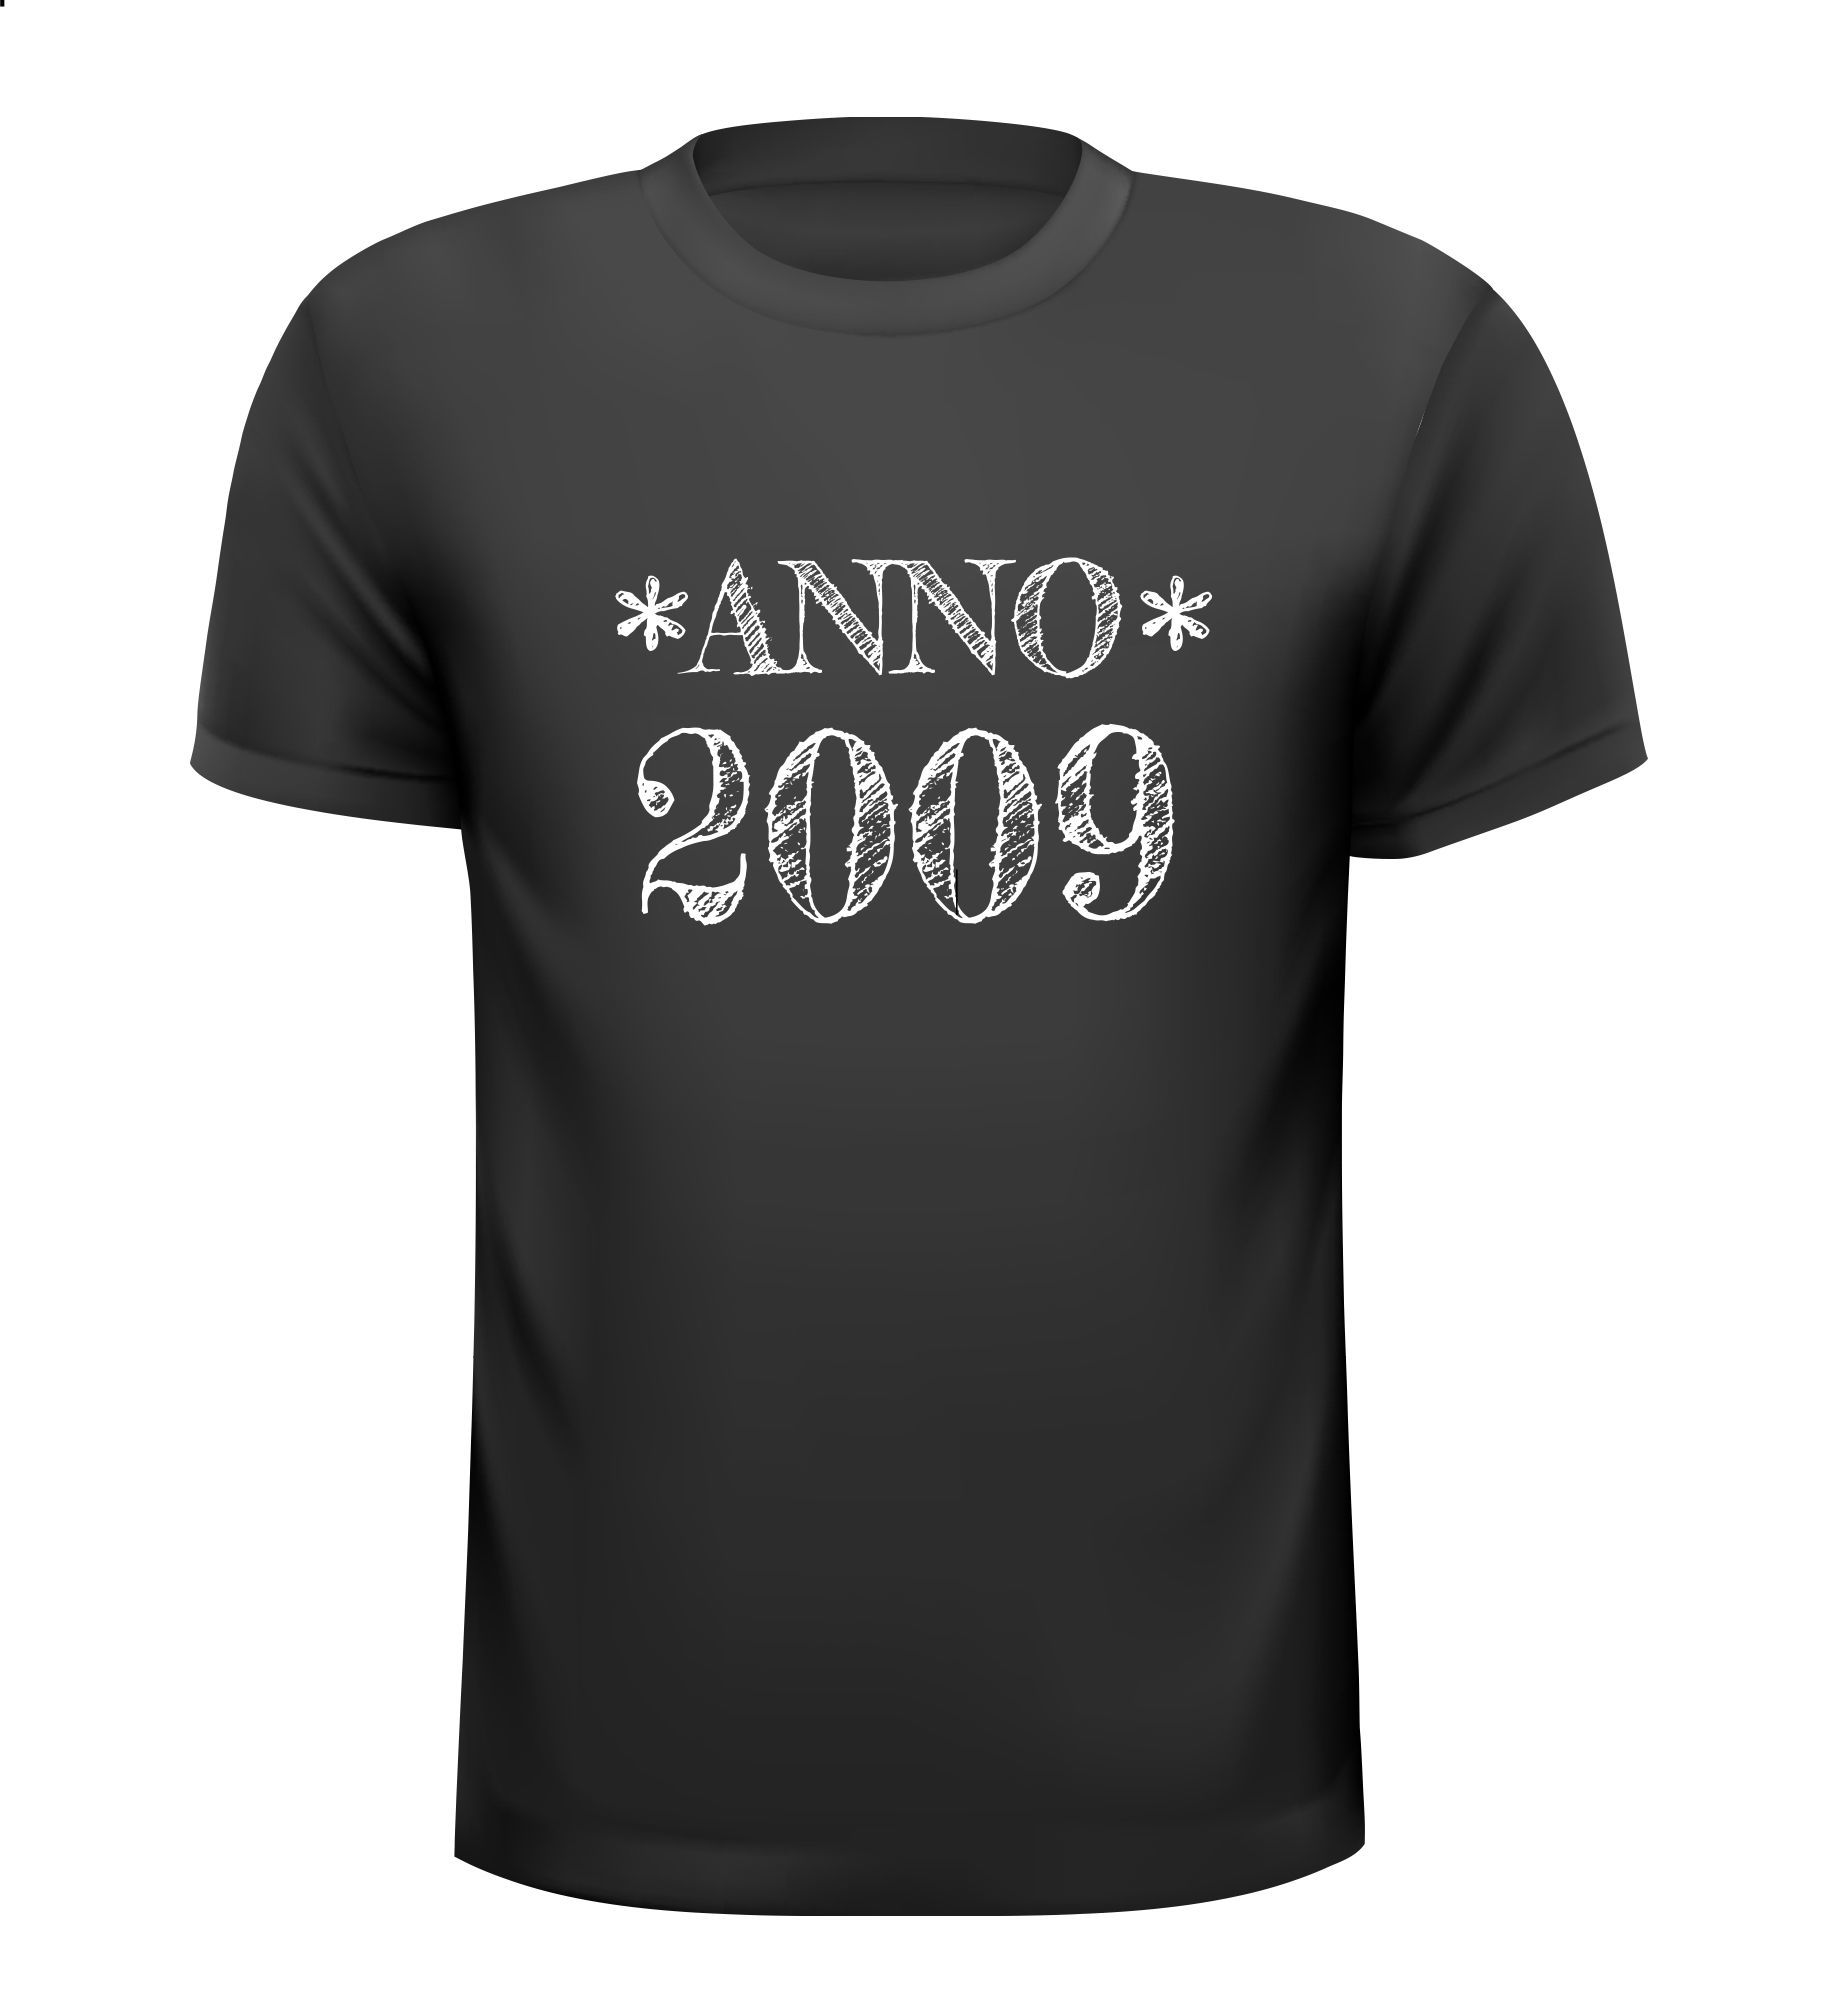 T-shirtje vintage look anno 2009 jaartal